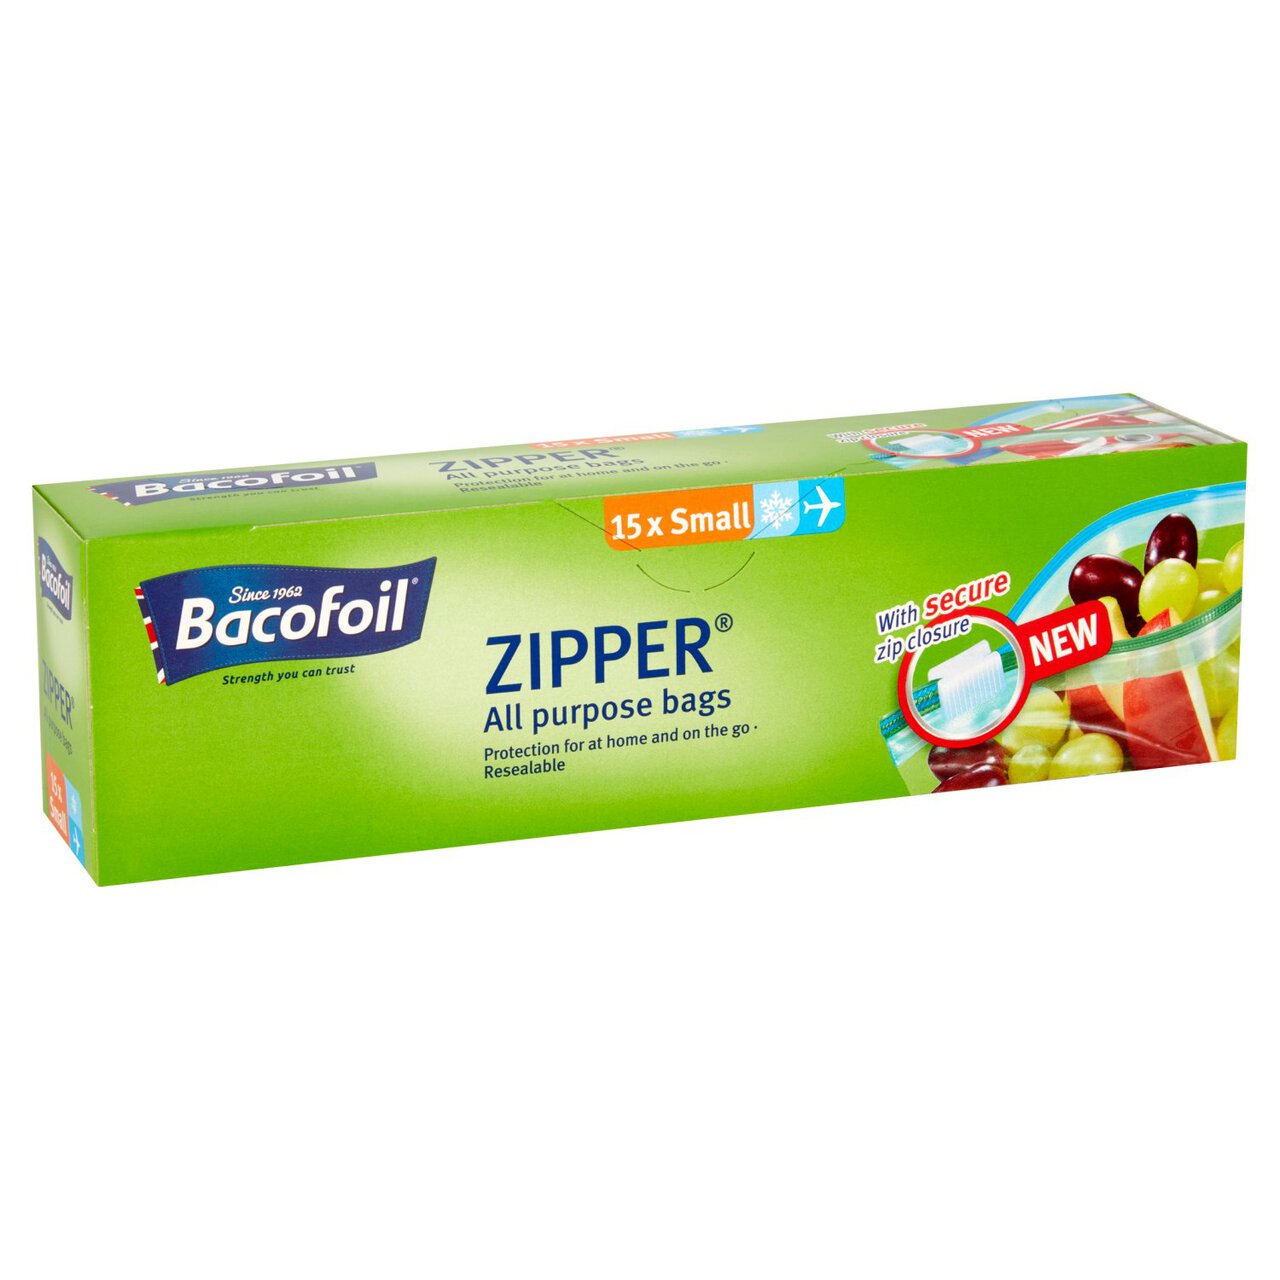 Bacofoil Small All Purpose Zipper Freezer Bags 15 per pack